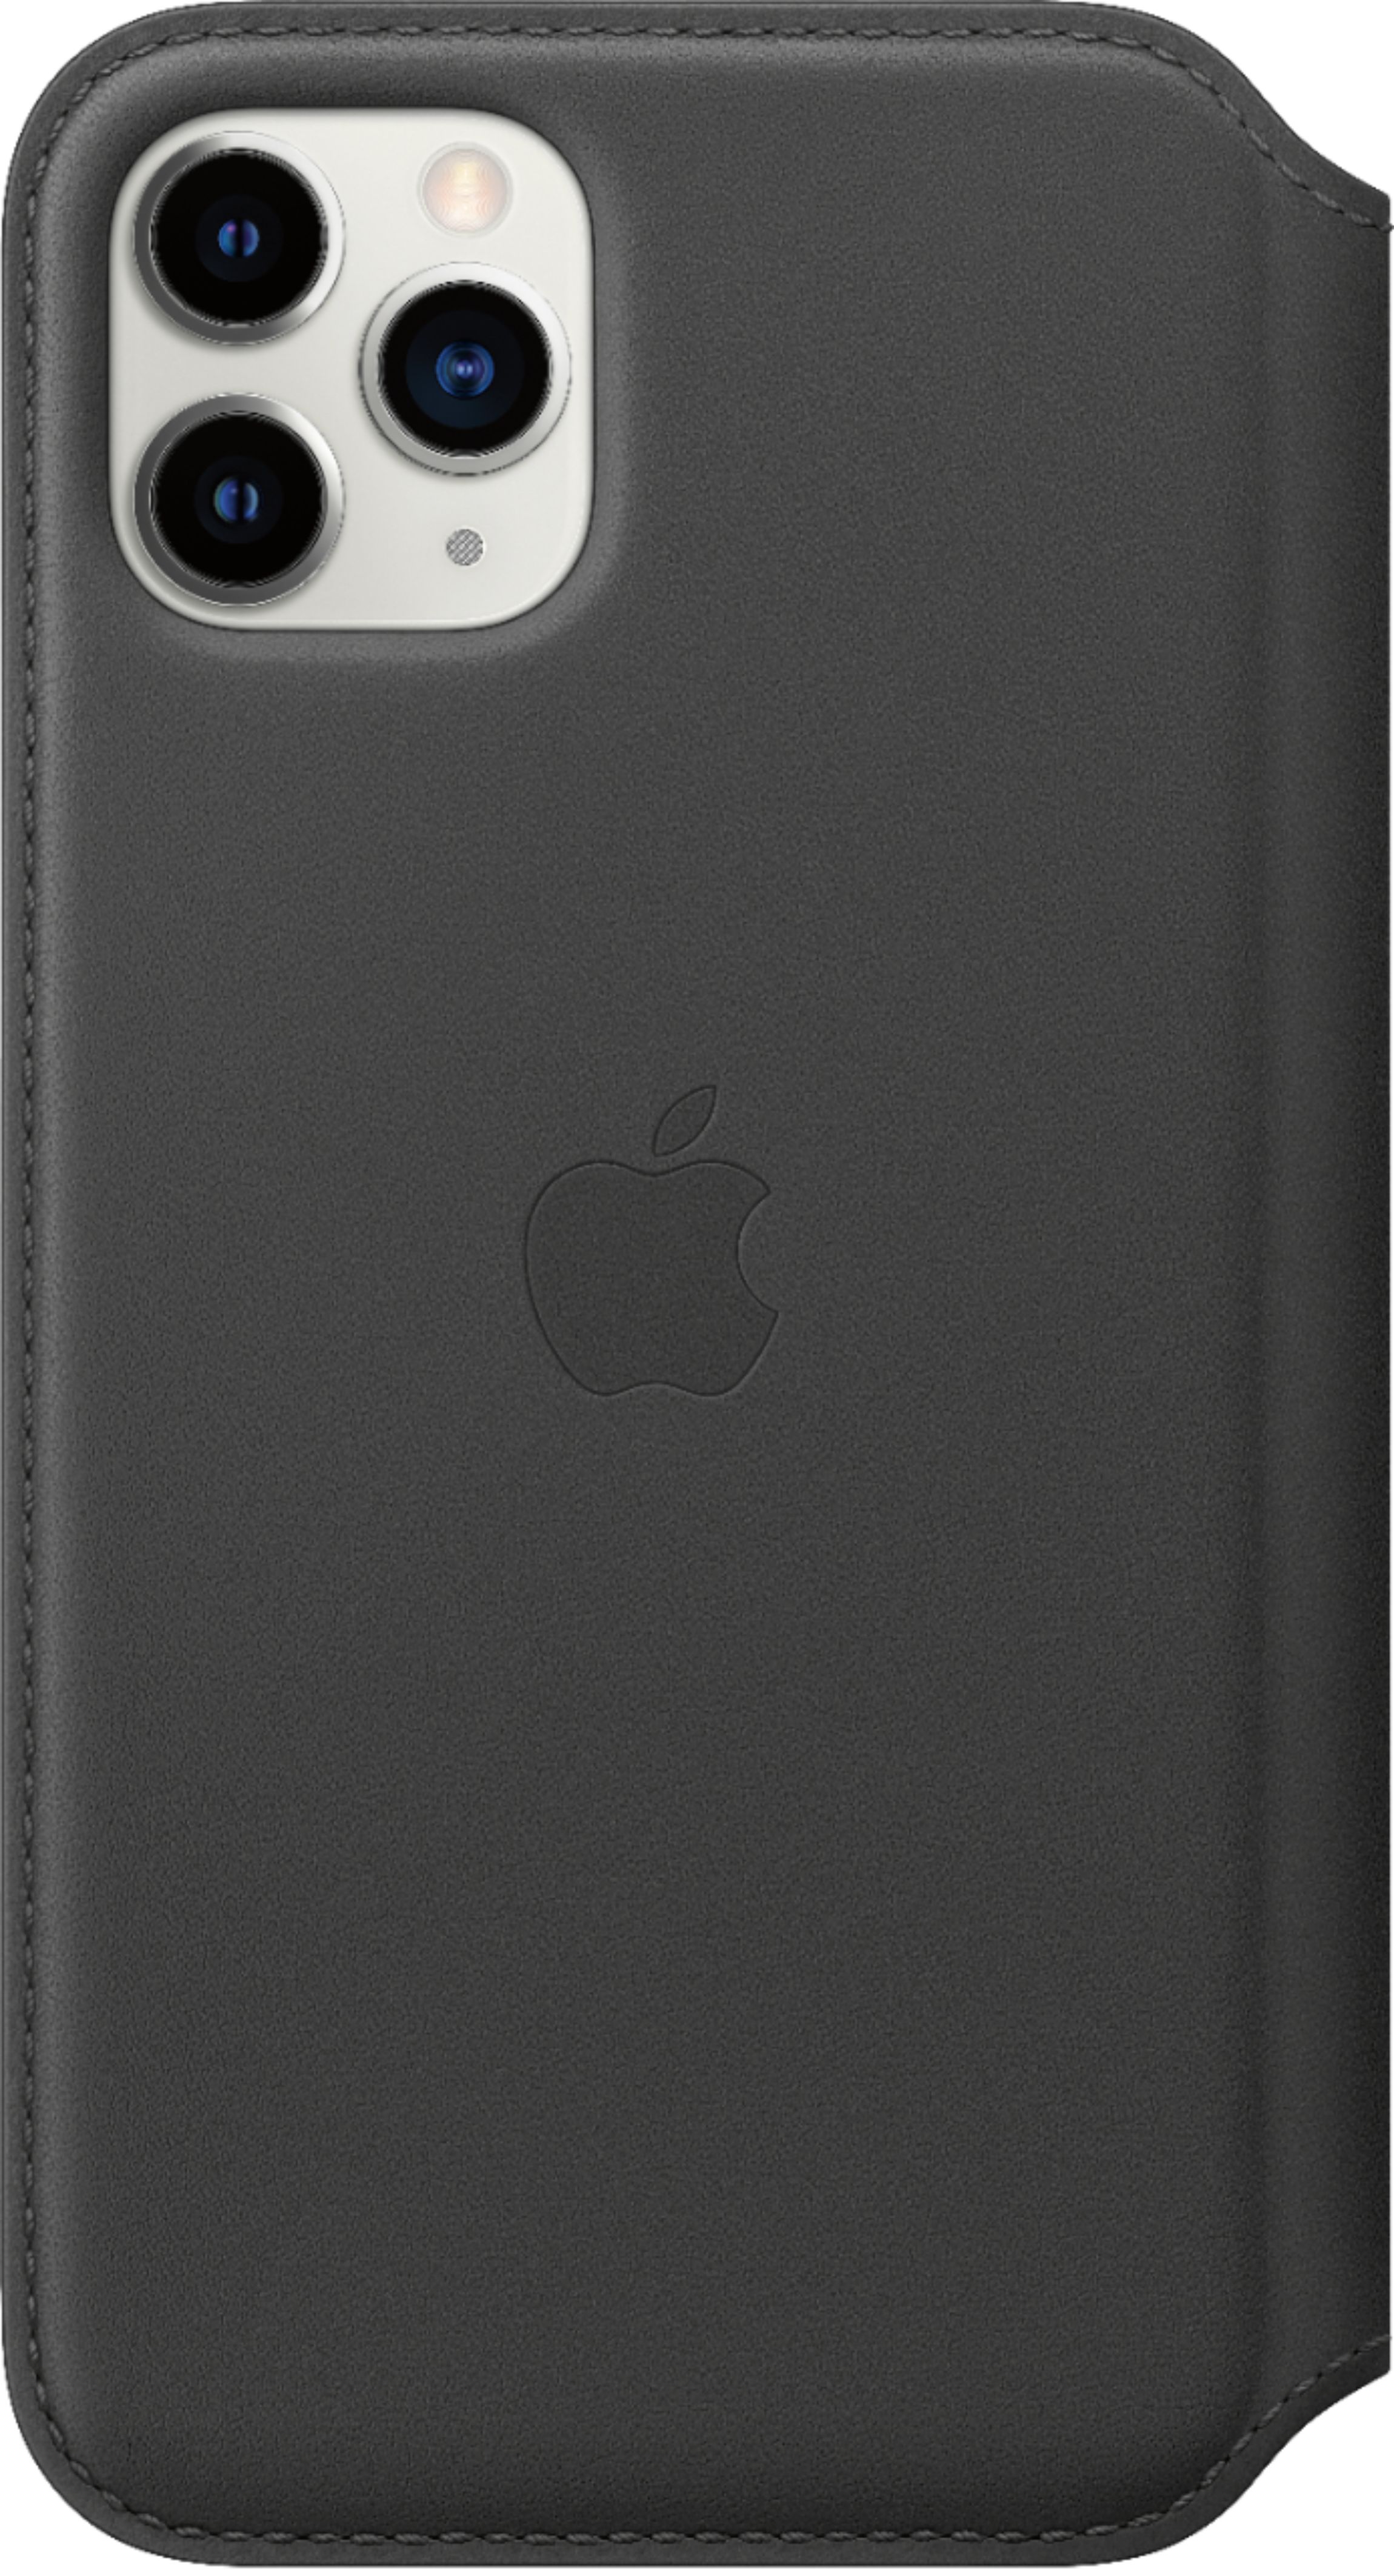 Apple - iPhone 11 Pro Leather Folio - Black